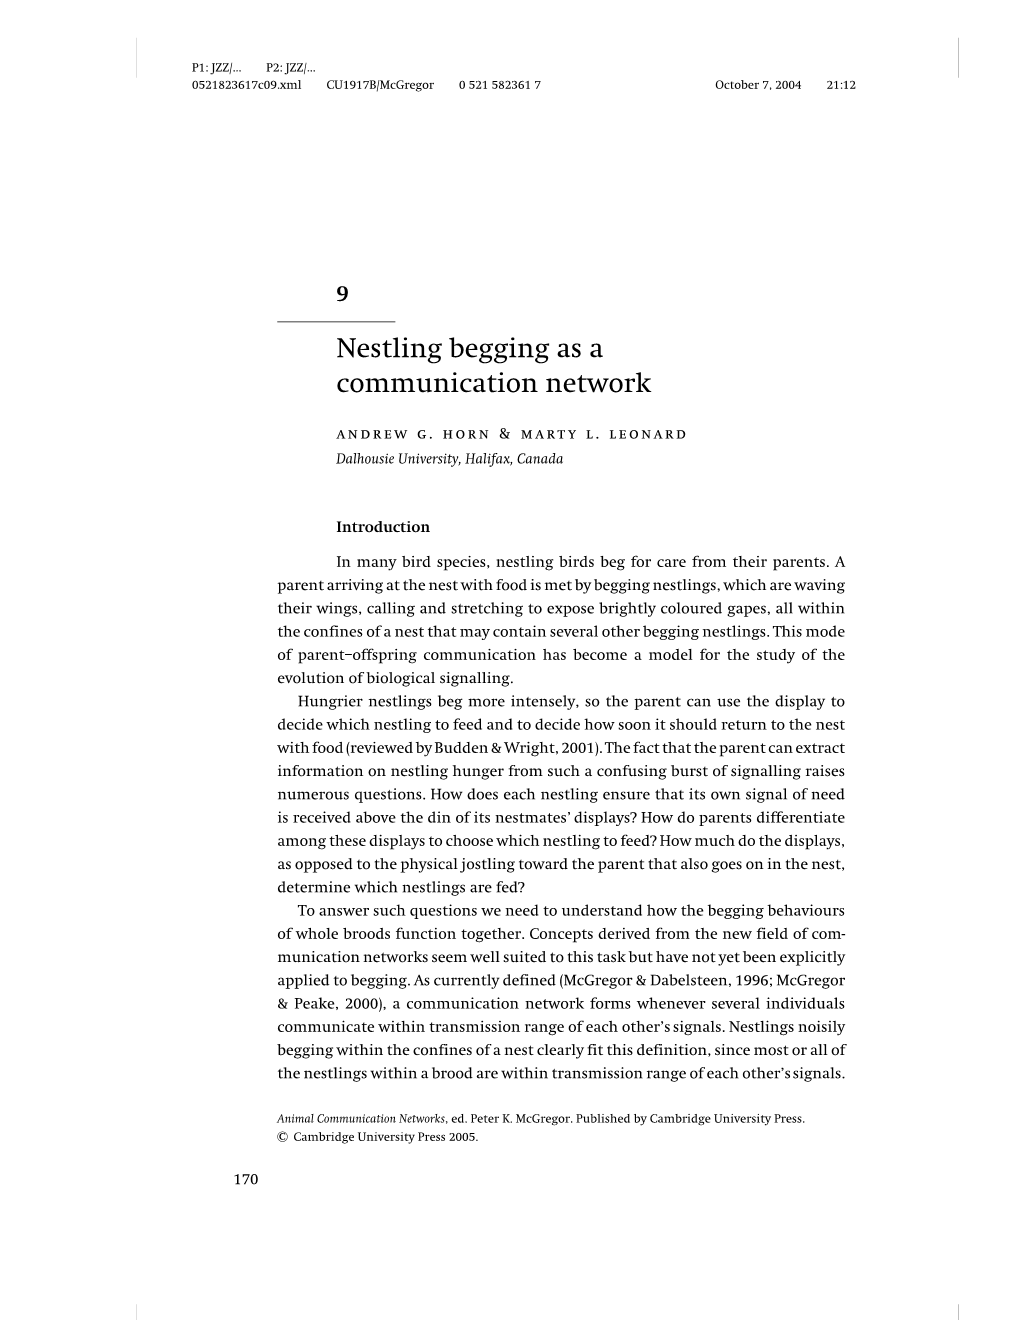 Nestling Begging As a Communication Network